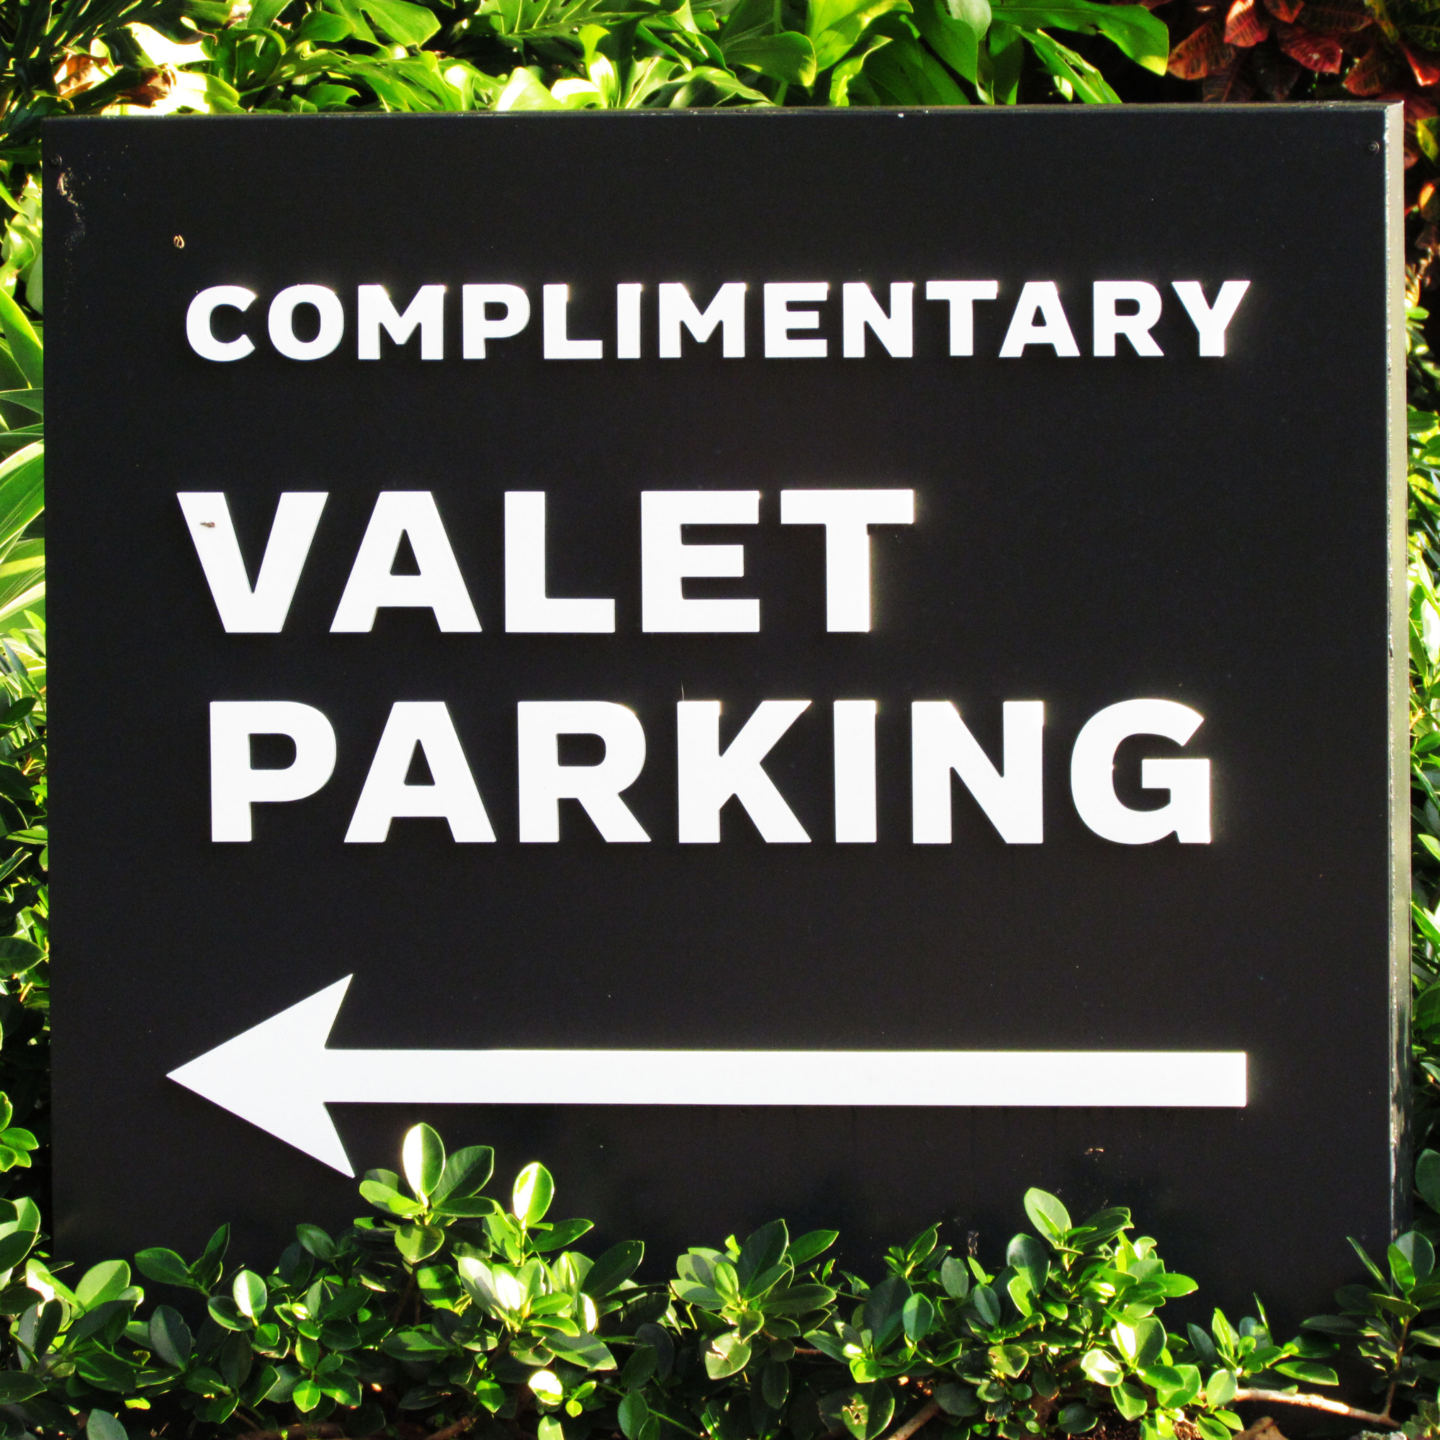 valet parking for resort and conference visitors